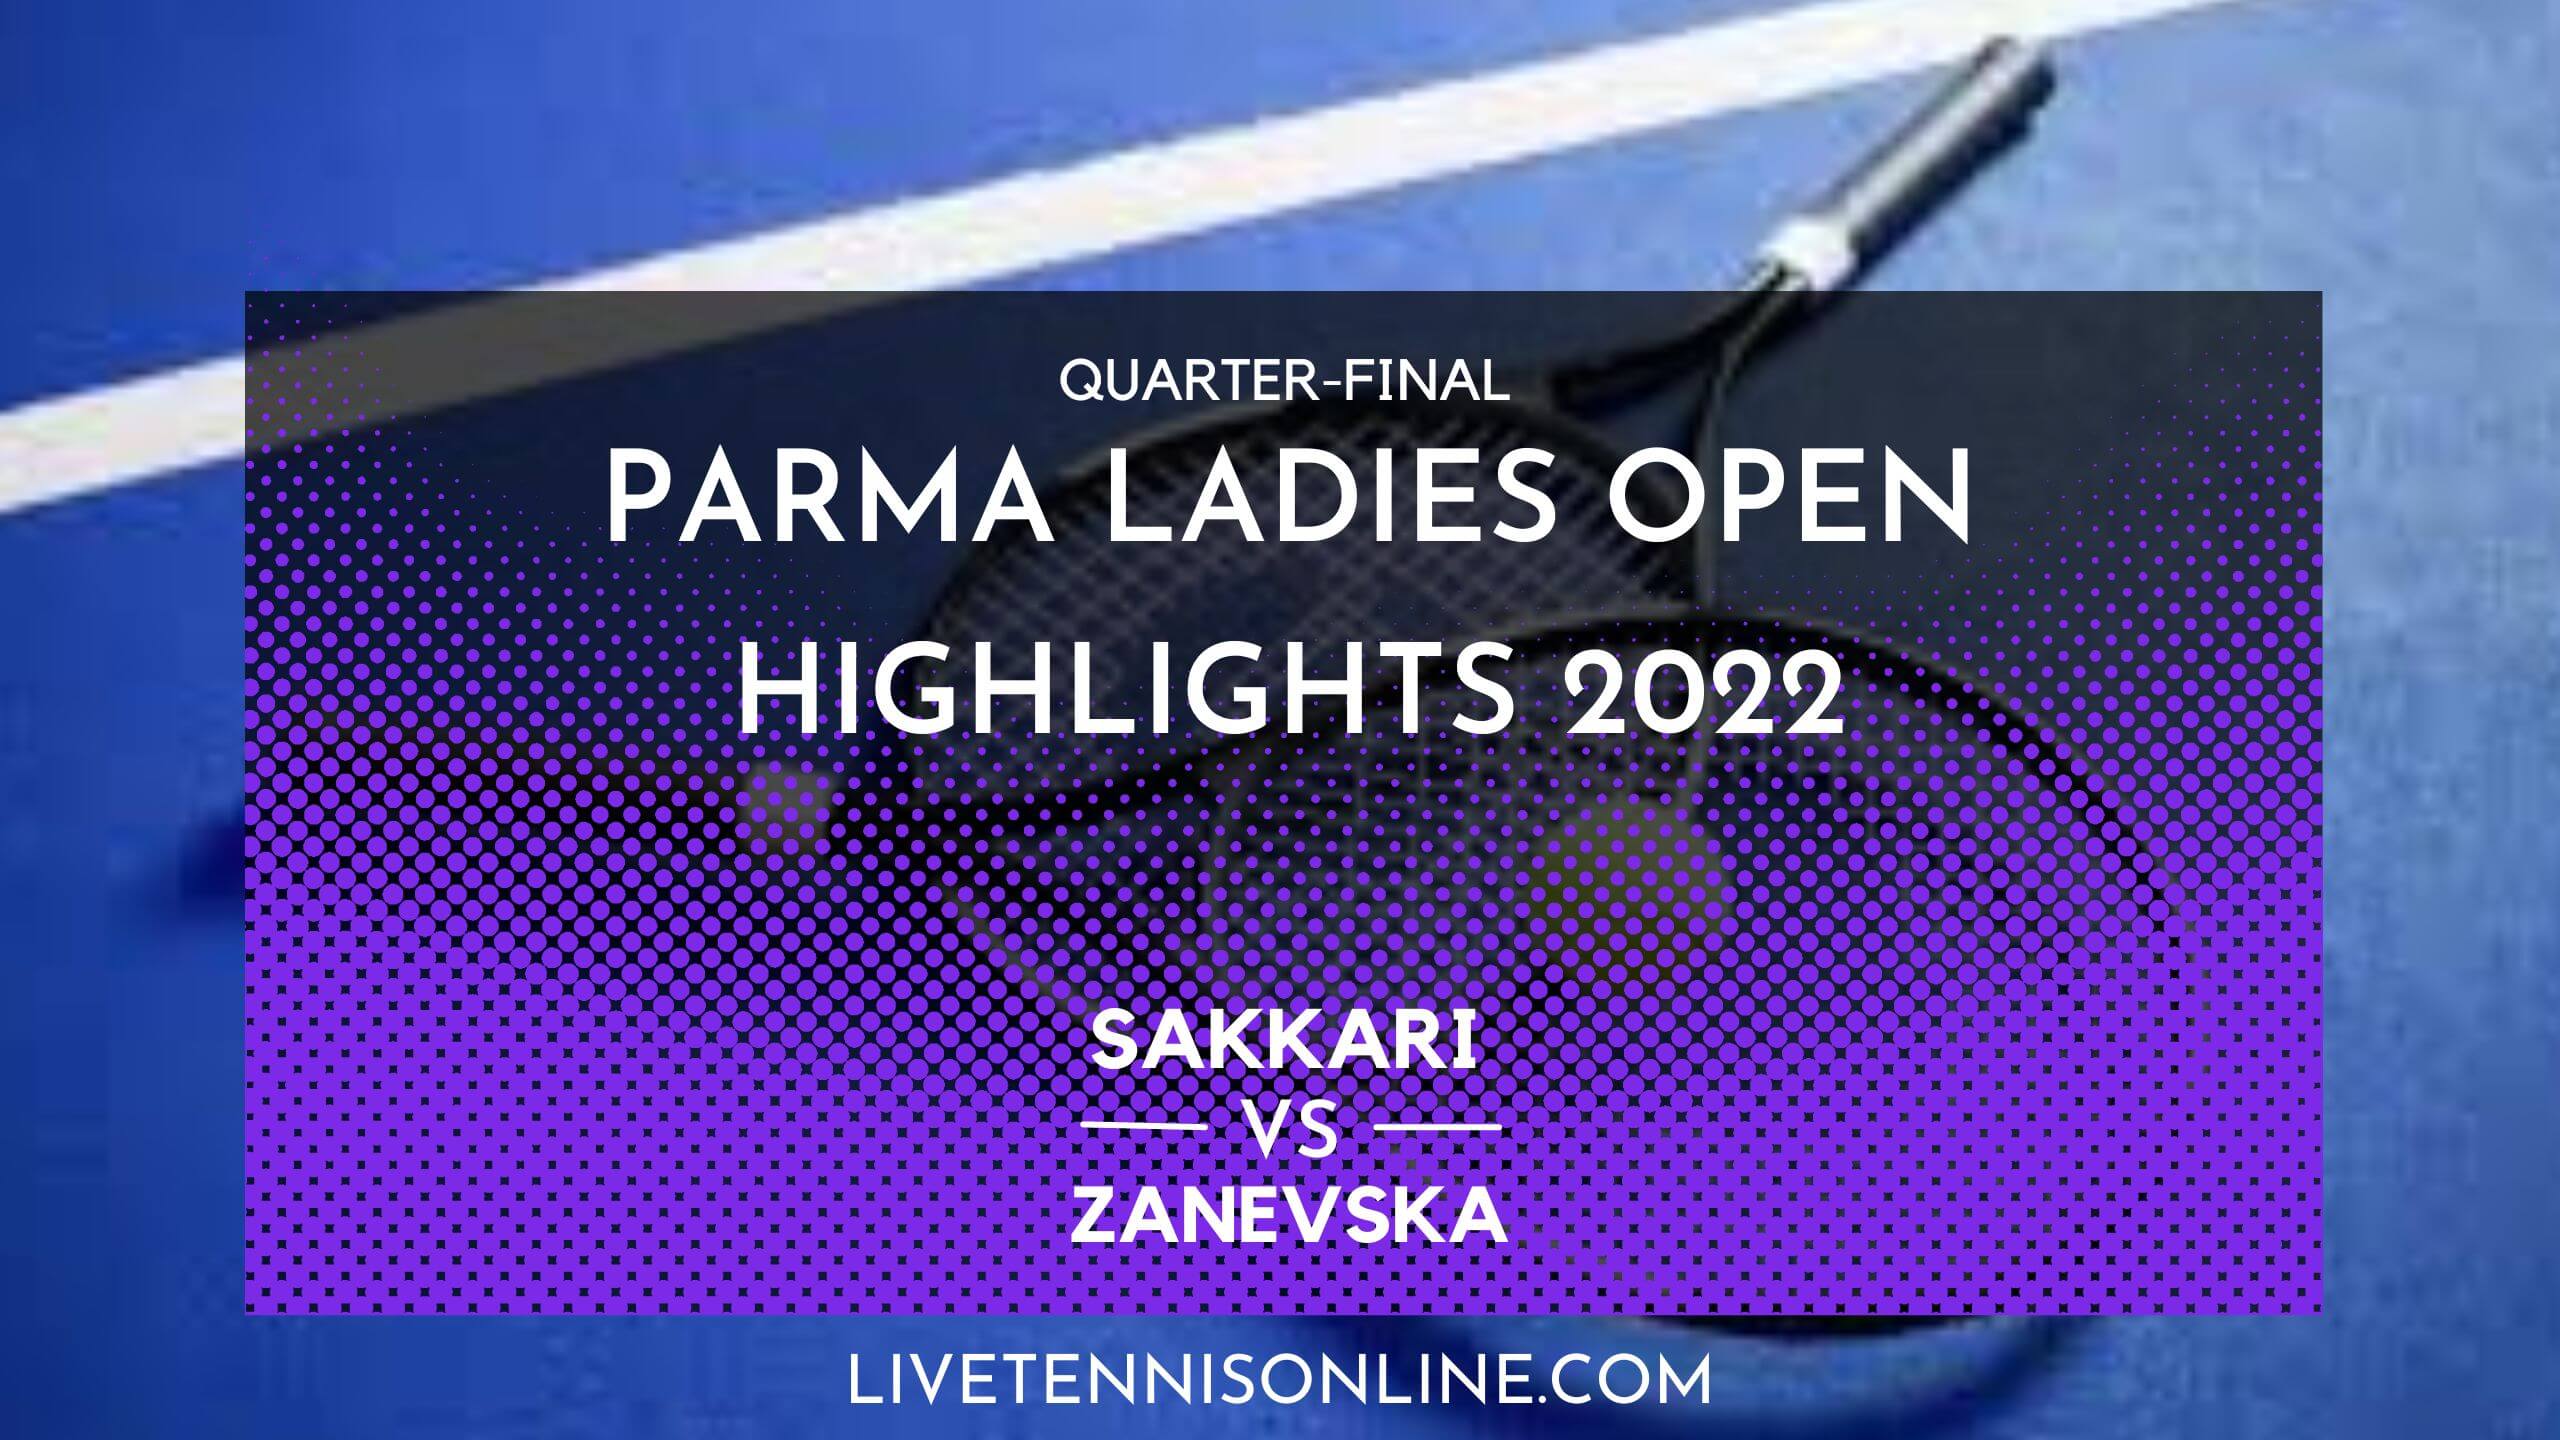 Sakkari Vs Zanevska QF Highlights 2022 Parma Ladies Open